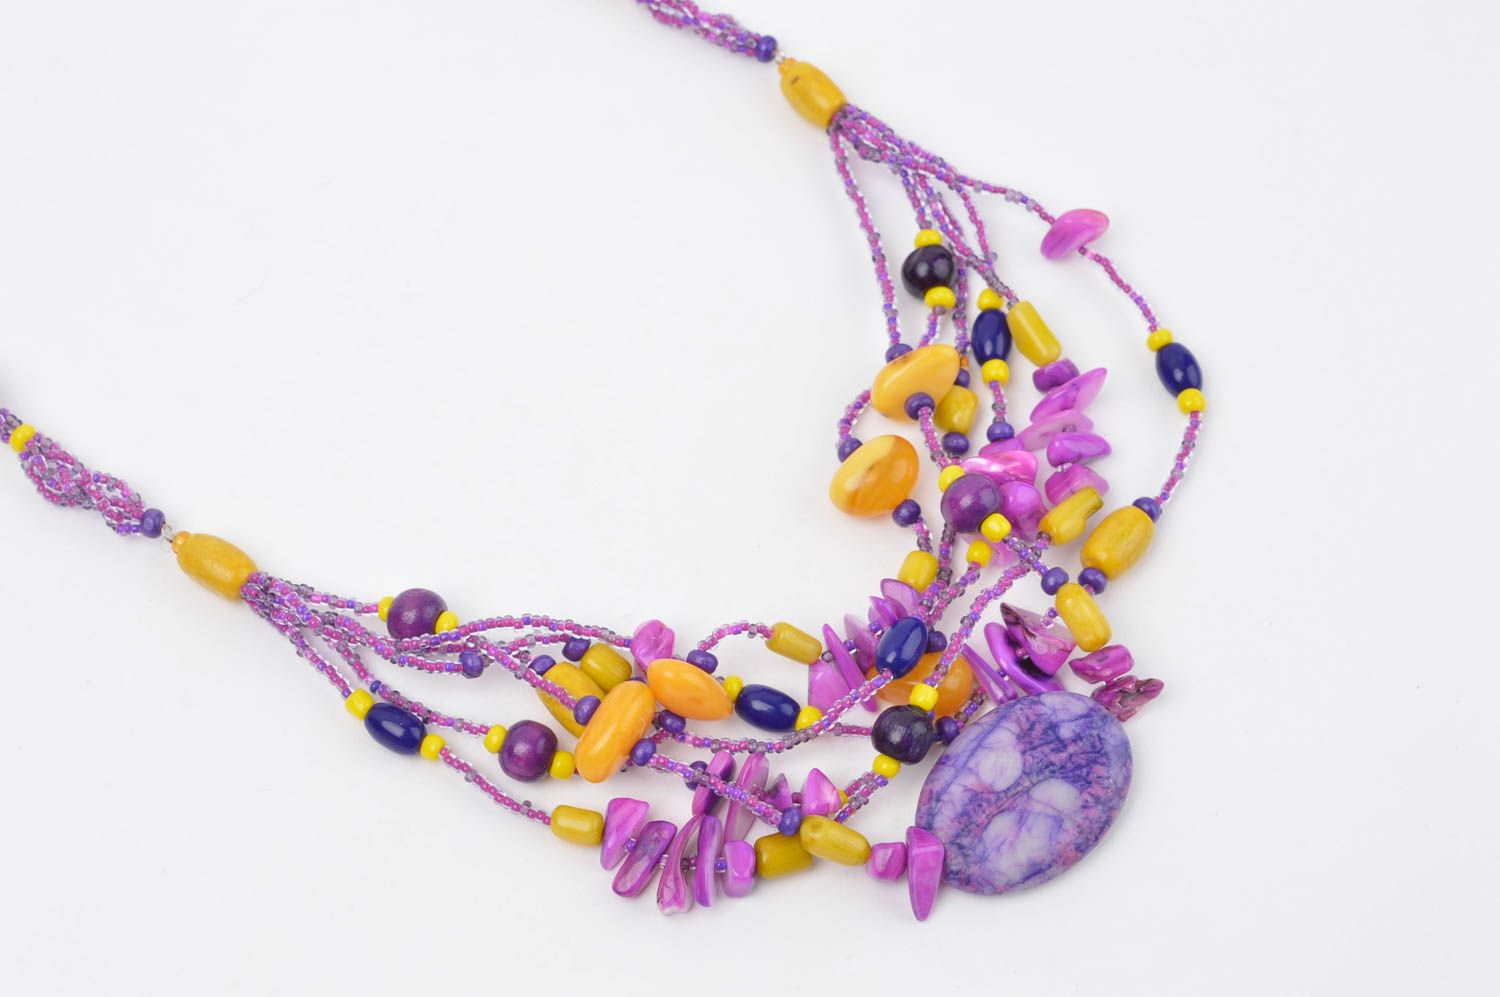 Handmade bead necklace for women gift ideas unusual accessory designer jewelry photo 1